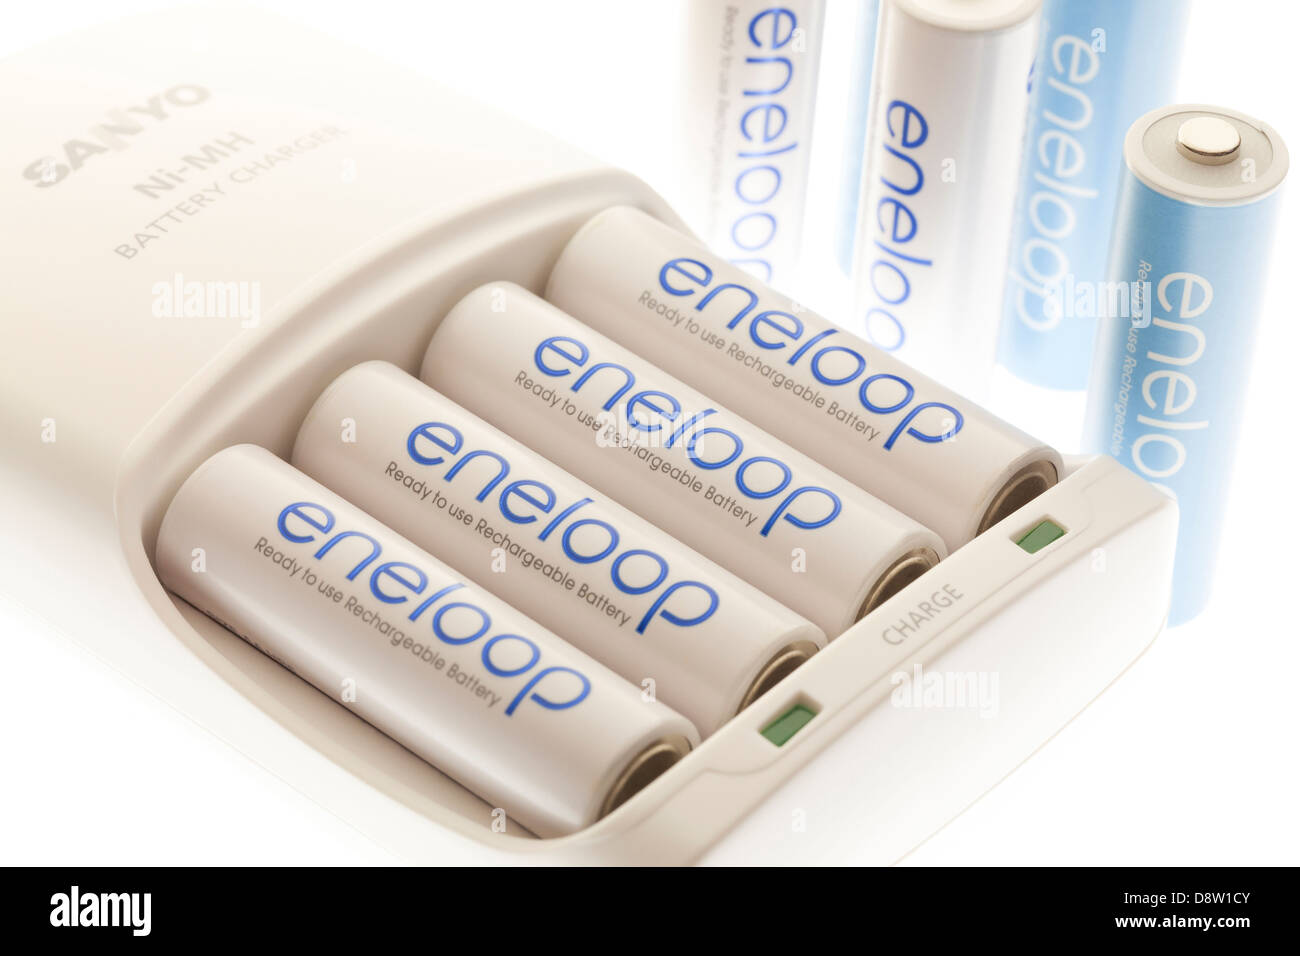 eneloop® Rechargeable Batteries, AAA (8 Pack), 1 - QFC